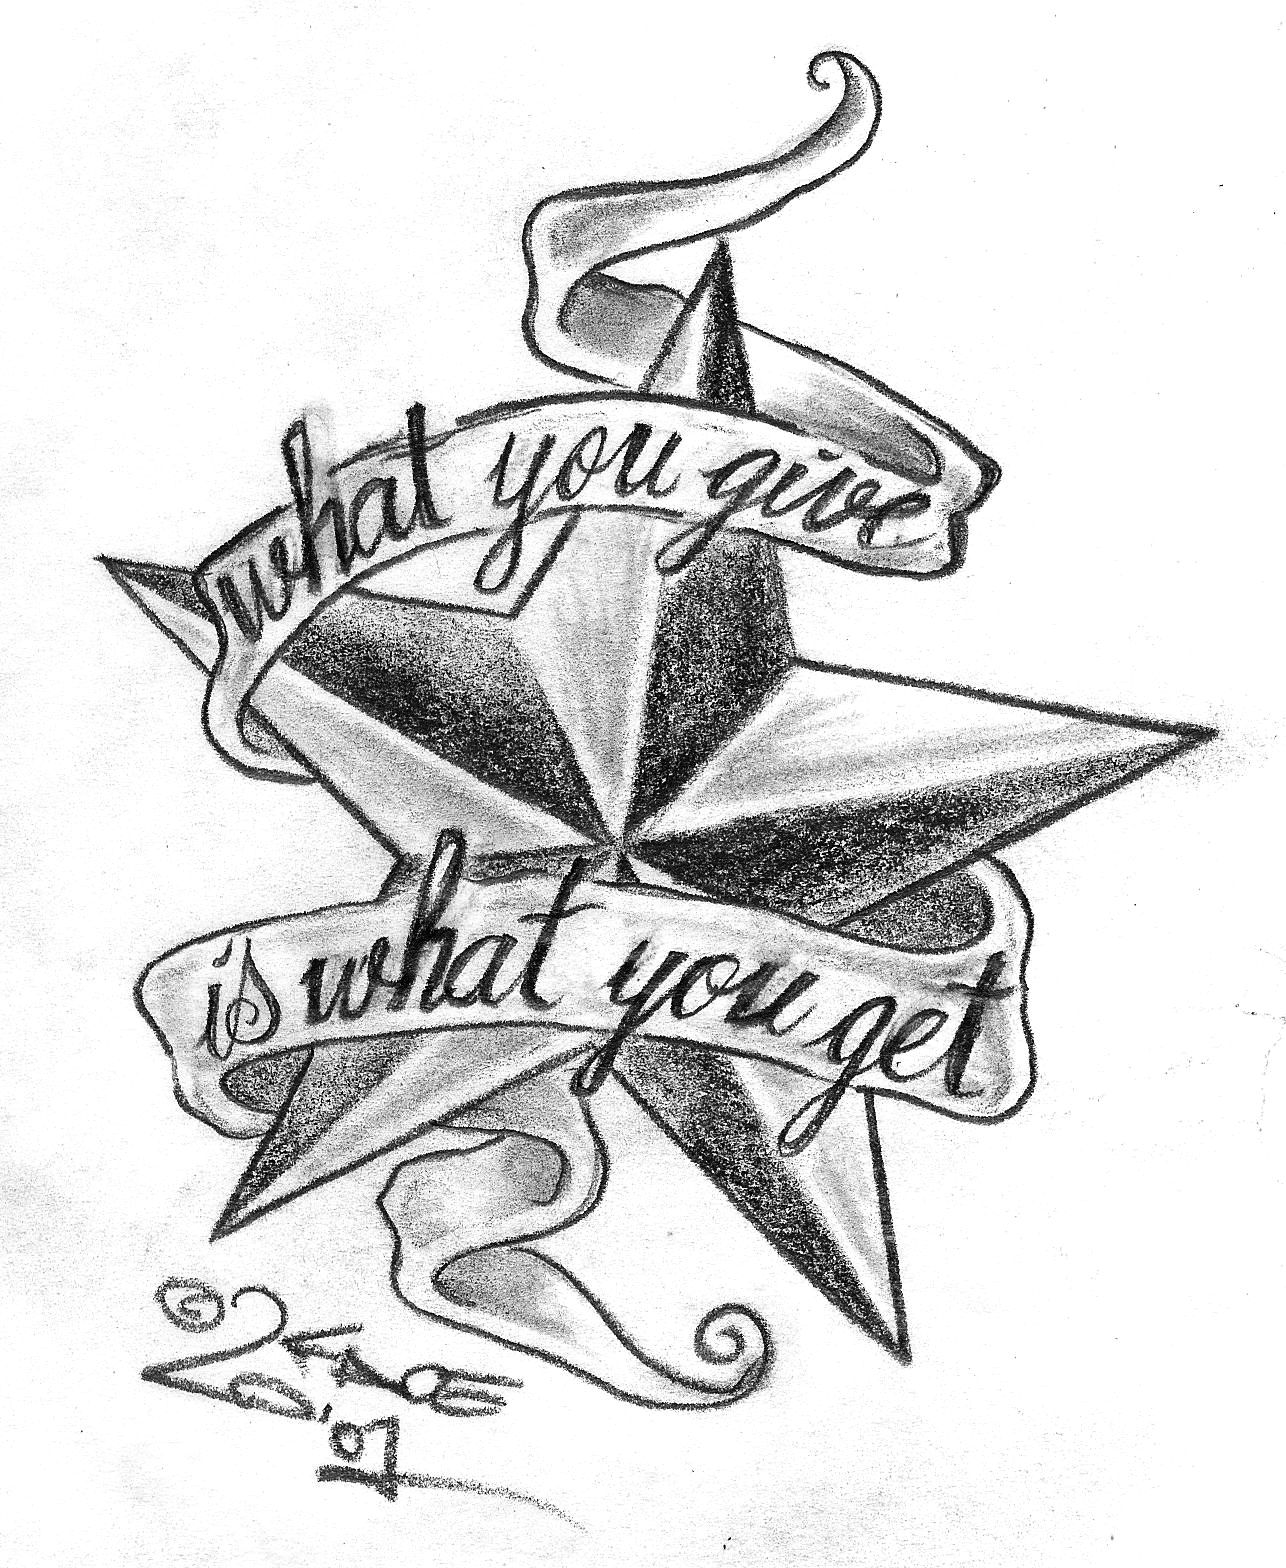 Tattoo Letter Designs